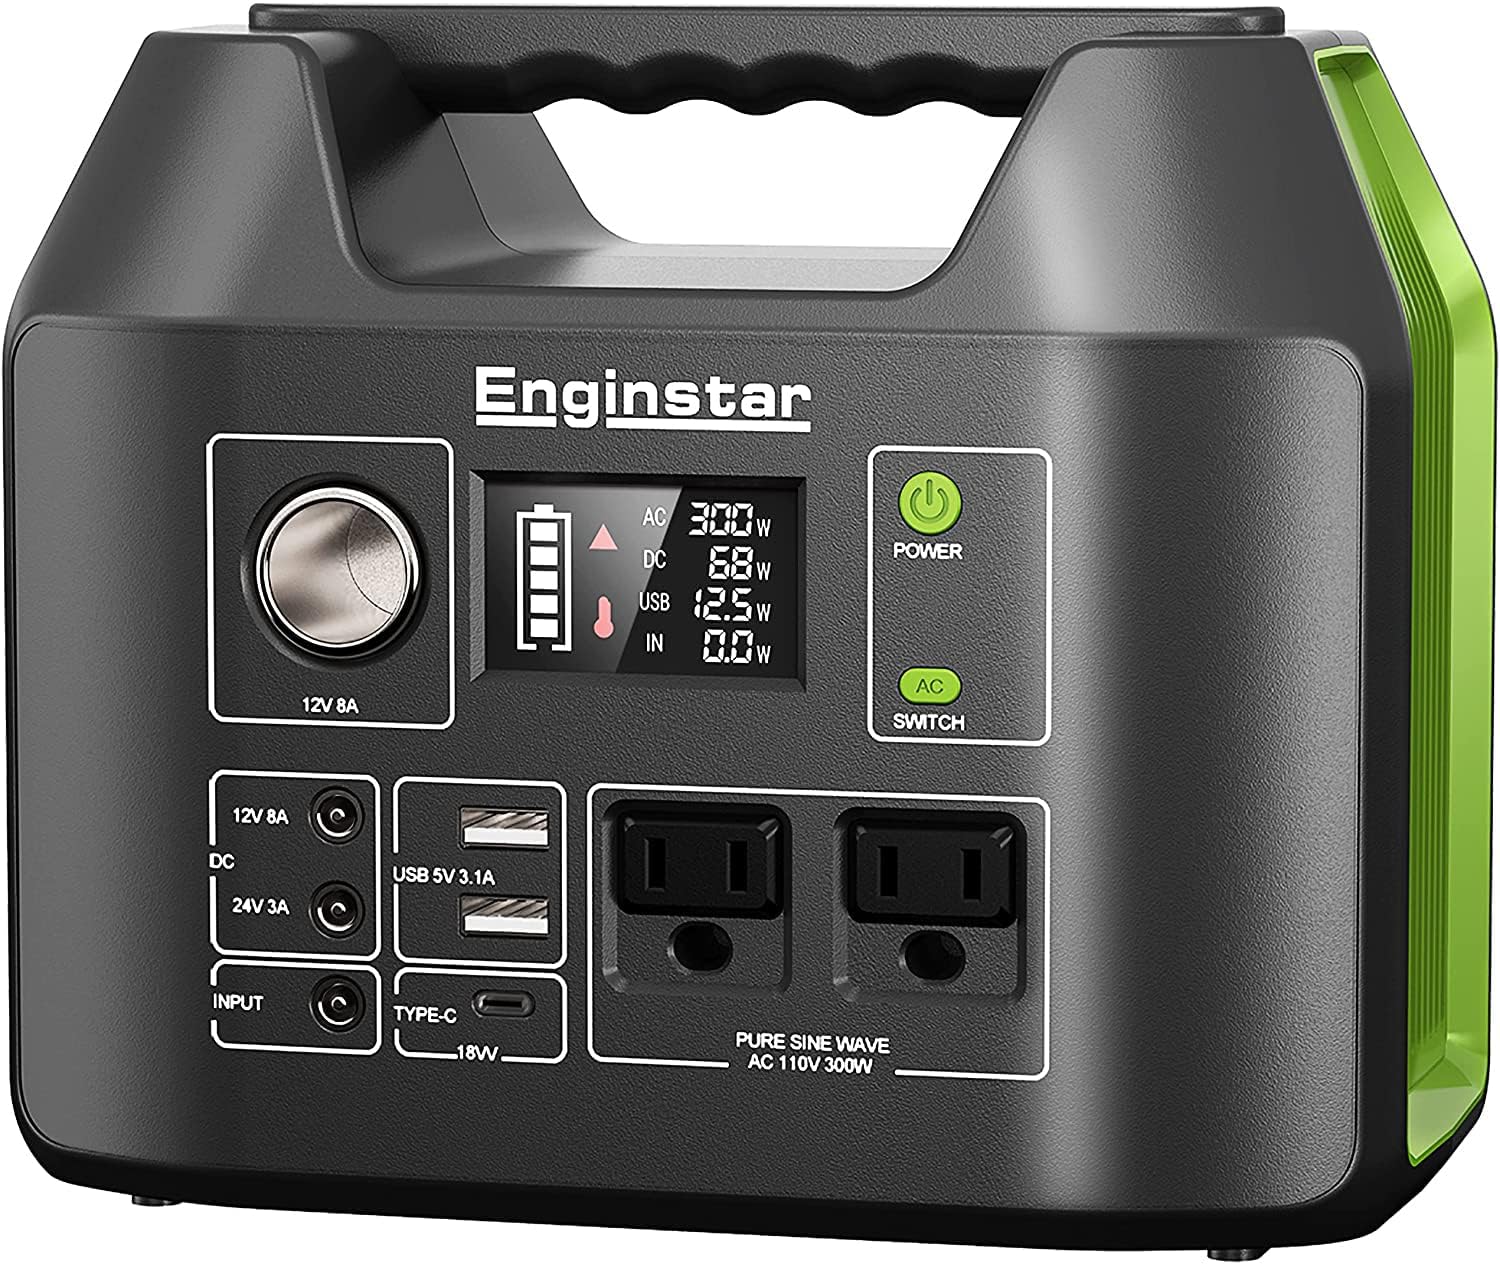 EnginStar Solar Generator Review